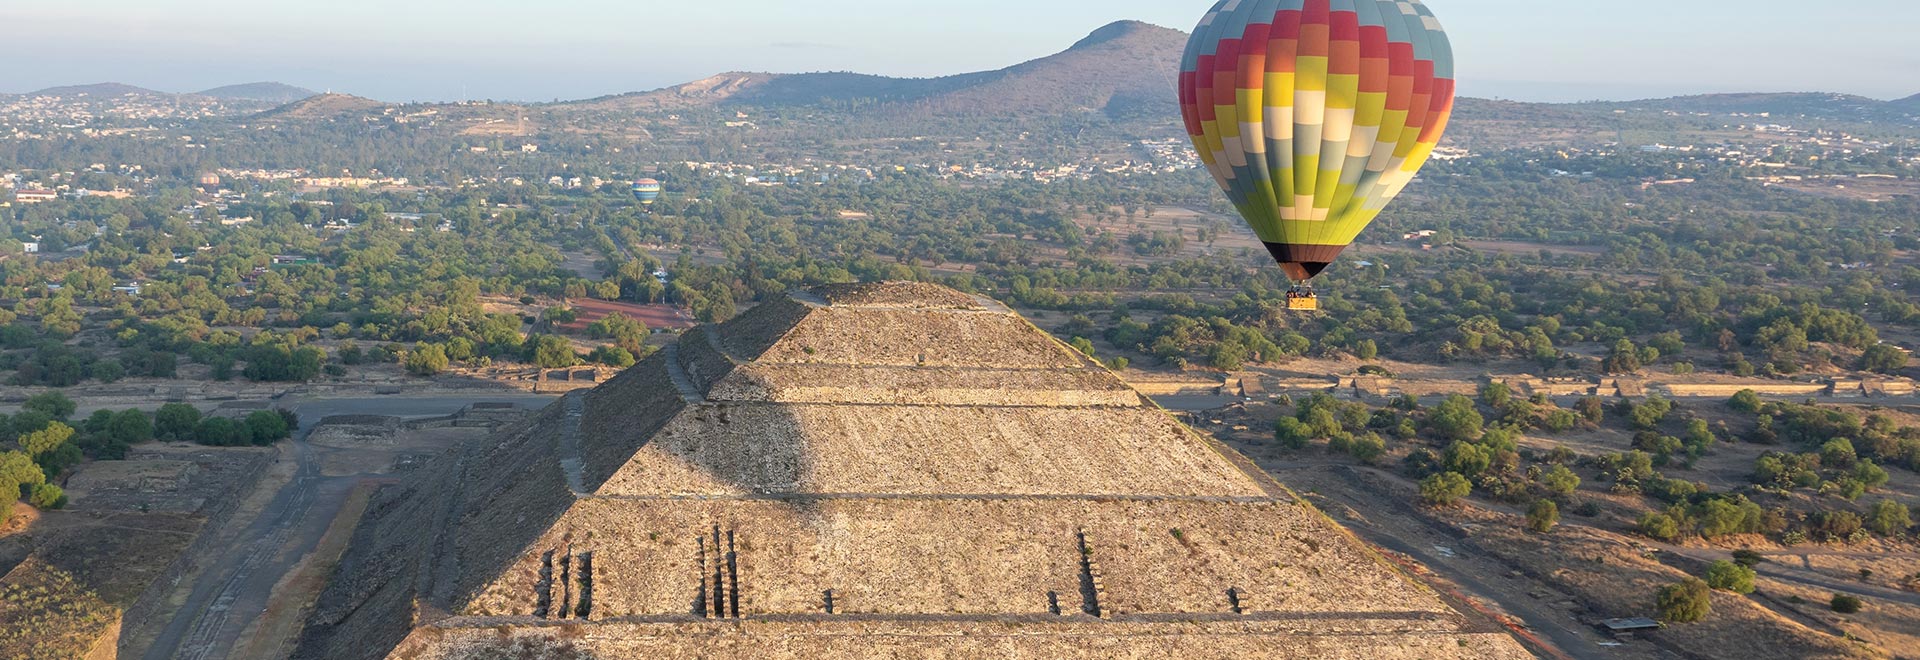 TM Mexico Teotihuacan Balloon m